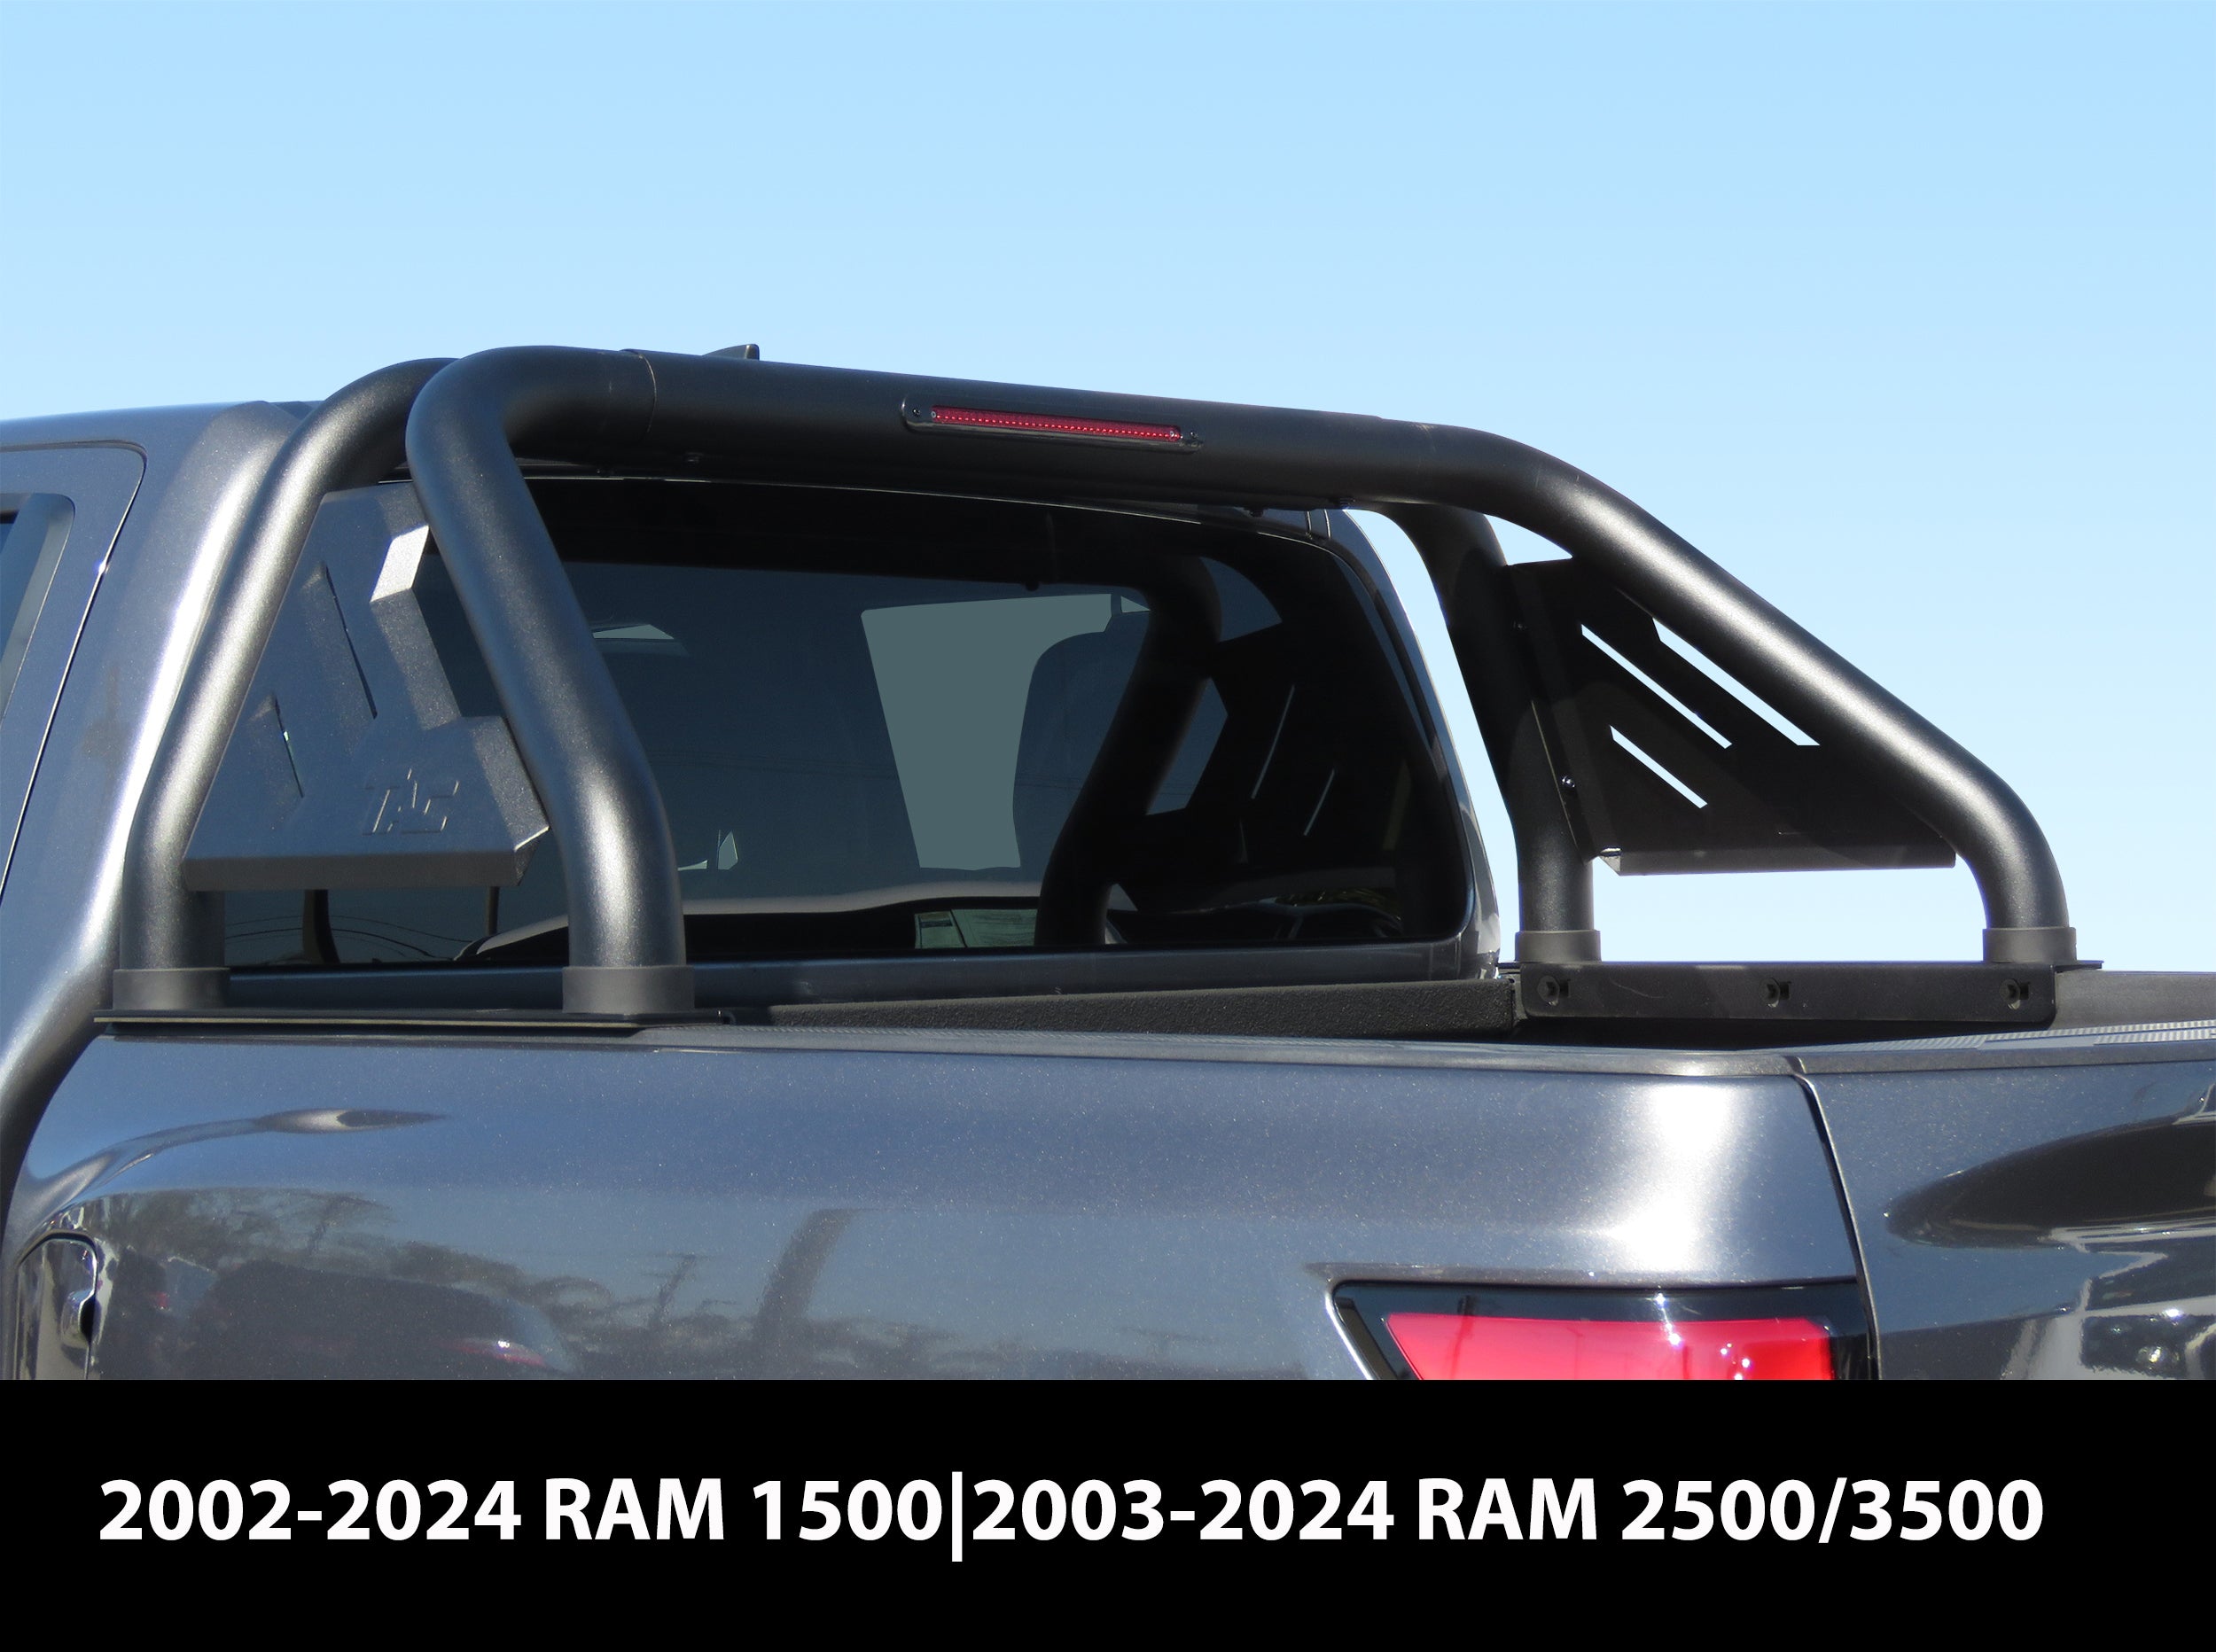 Fits 2002-2024 RAM 1500|2003-2024 RAM 2500/3500 Full Size Pickup Truck Roll Bar| Sport Bar| With Brake Light| Carbon Steel Black(Include Mount Plate of LED Light) - 0